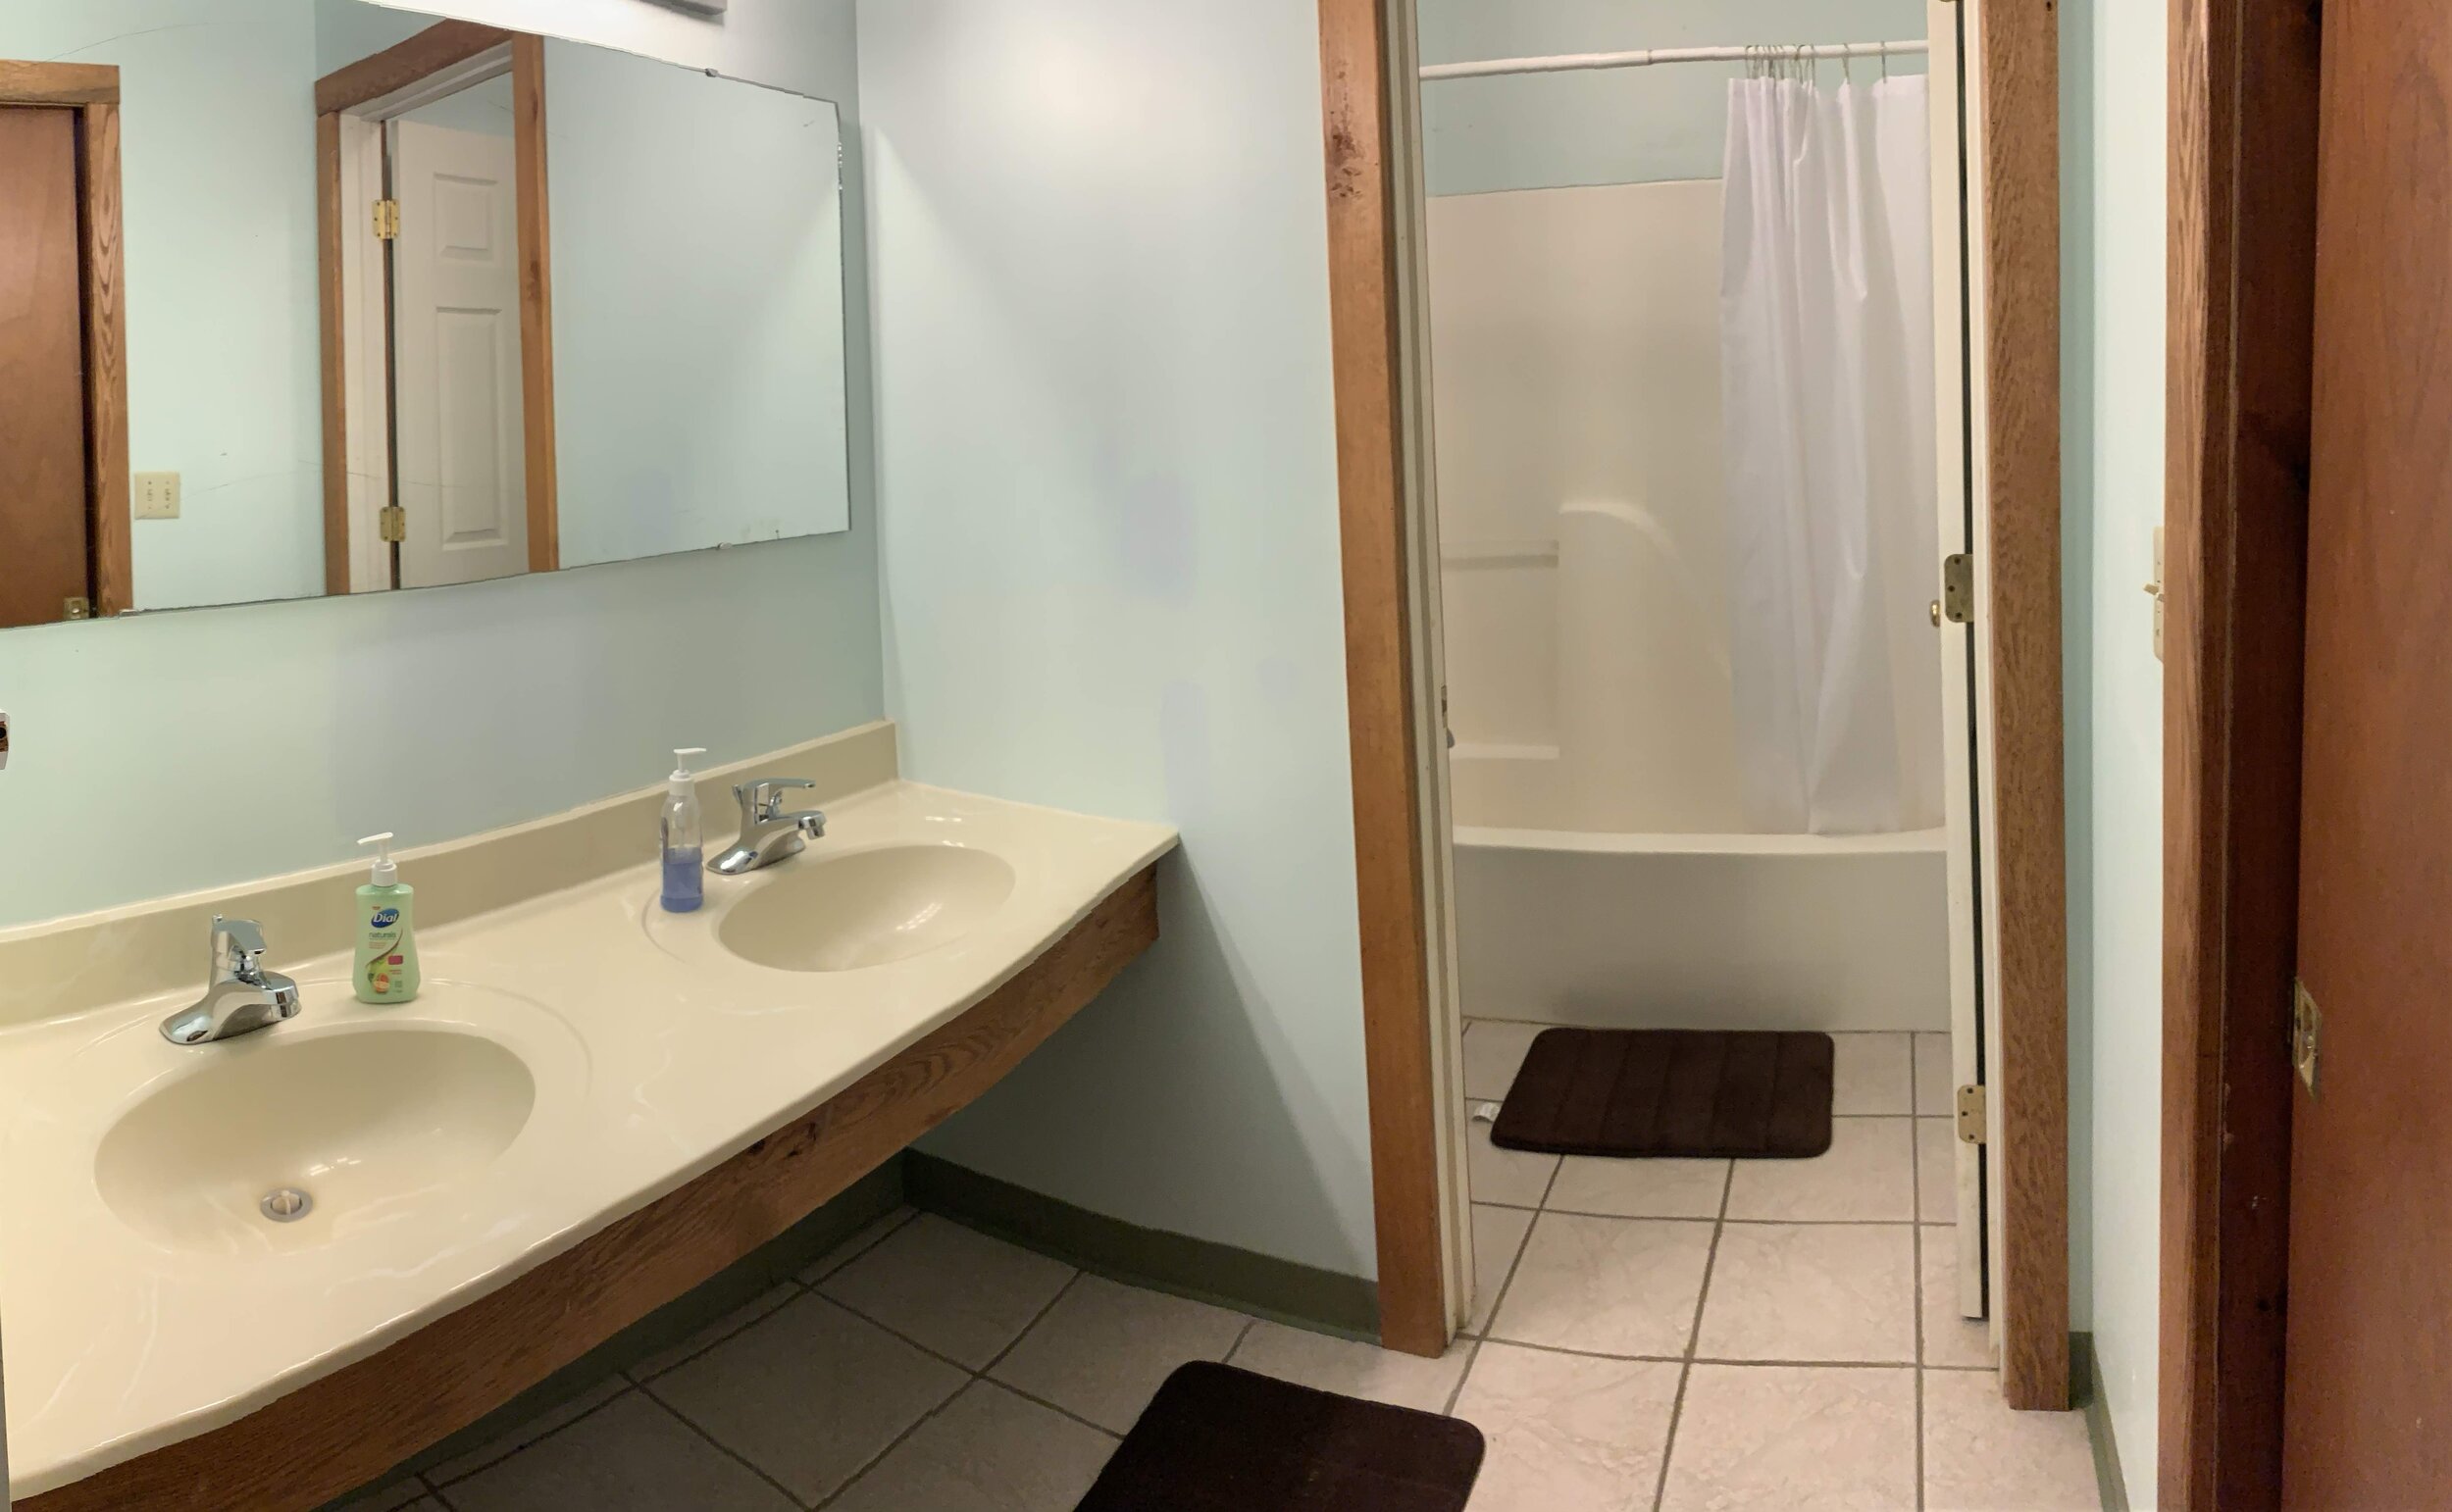 Motel 1-6 bathroom.jpg